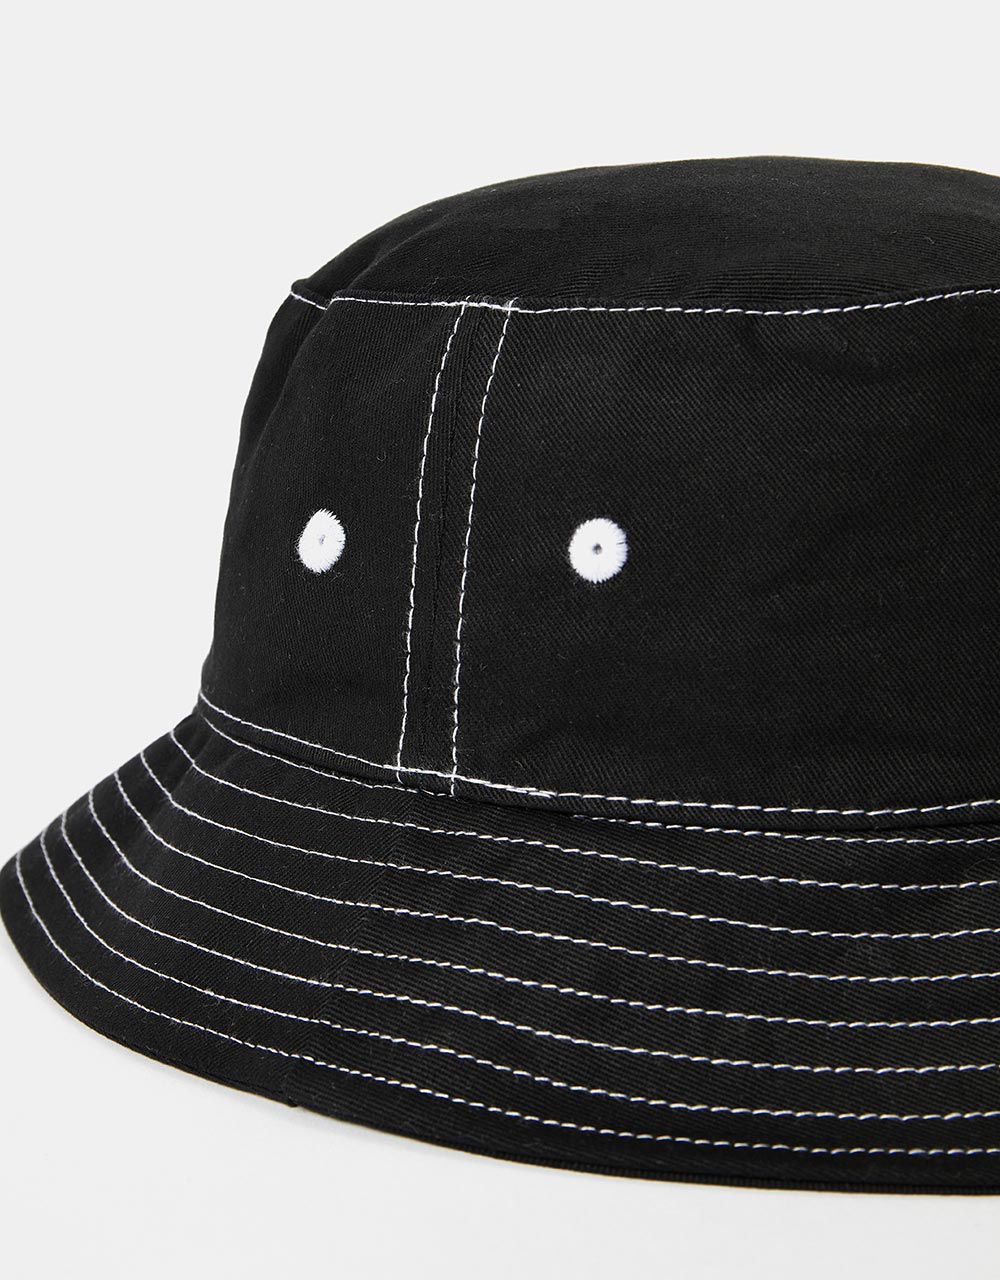 Santa Cruz Classic Label Bucket Hat - Black/White